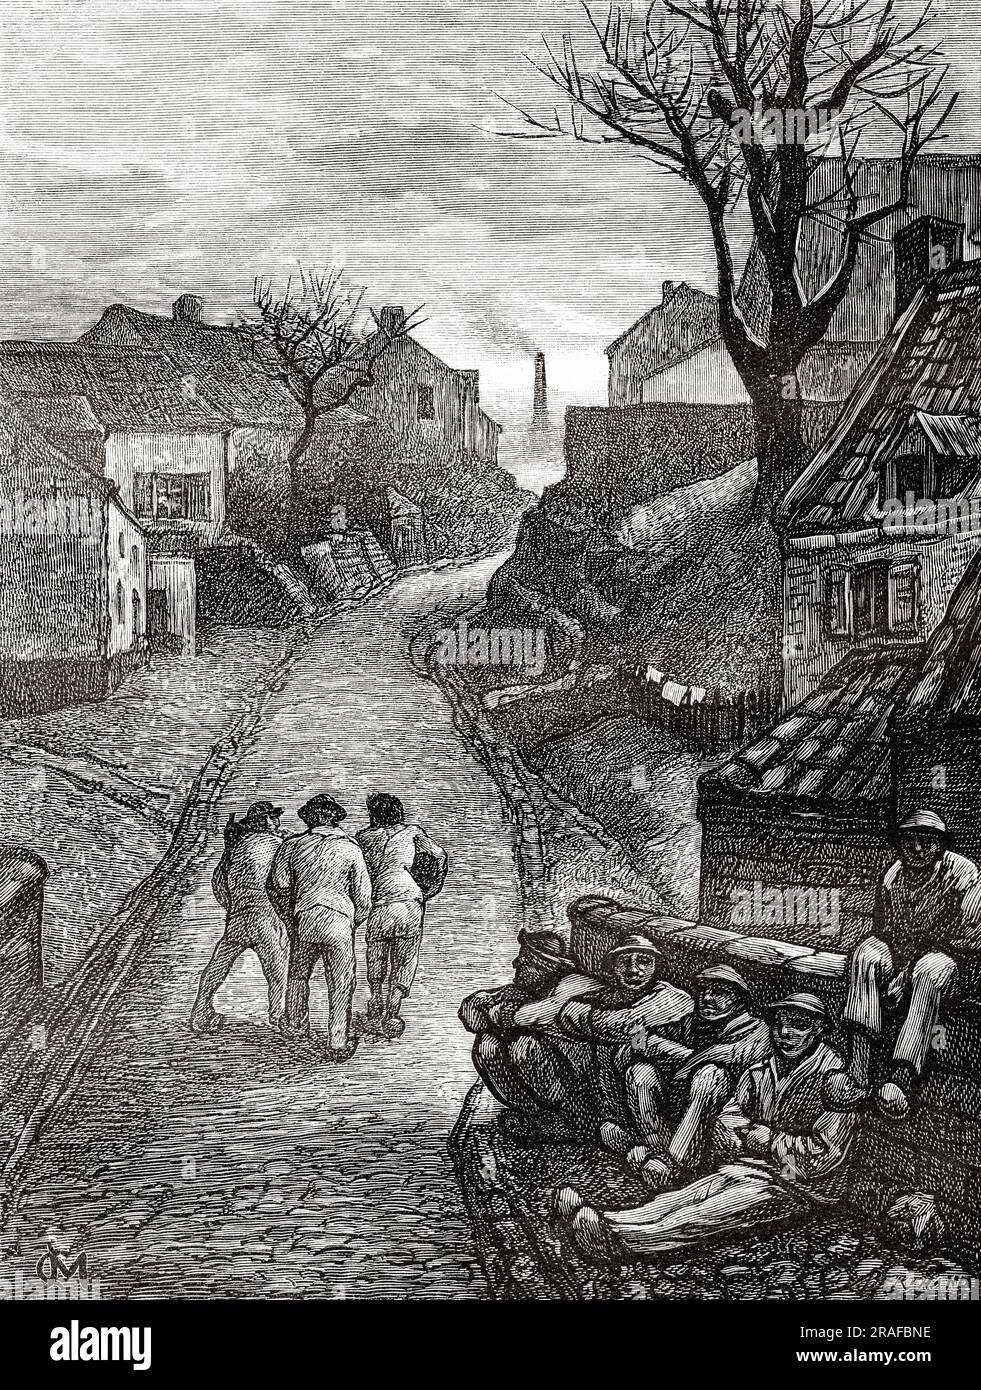 Coal mining village of Borinage, Hainaut province. Belgium, Europe. Journey to Belgium by Camille Lemonnier. Old 19th century engraving from Le Tour du Monde 1906 Stock Photo